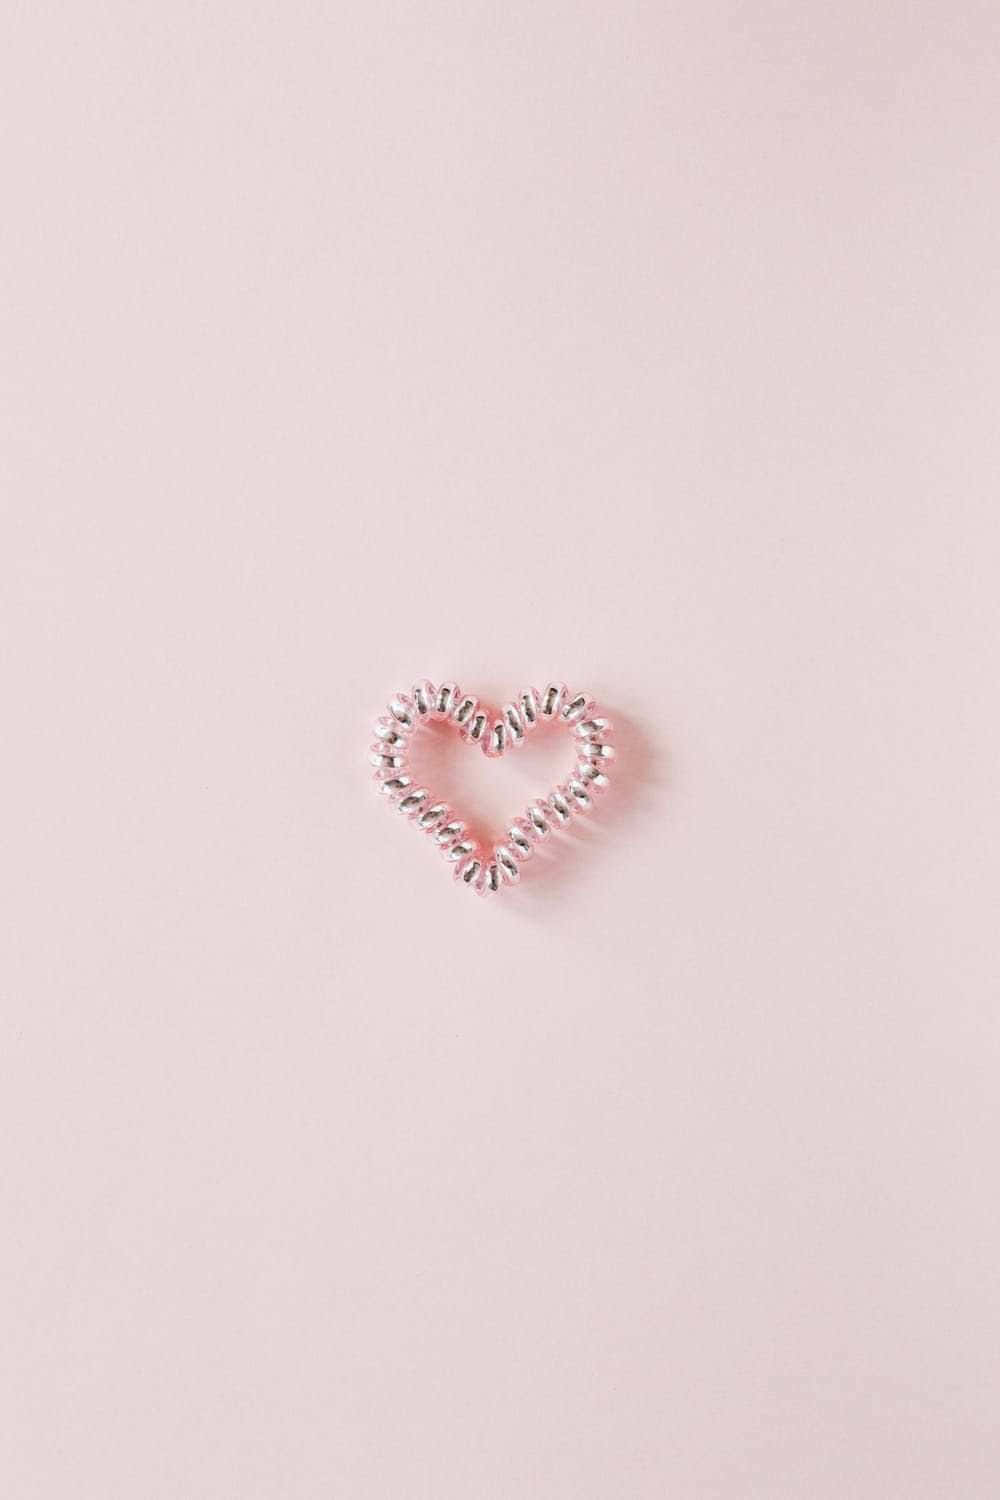 Candy Heart Lovecore Aesthetic.jpg Wallpaper